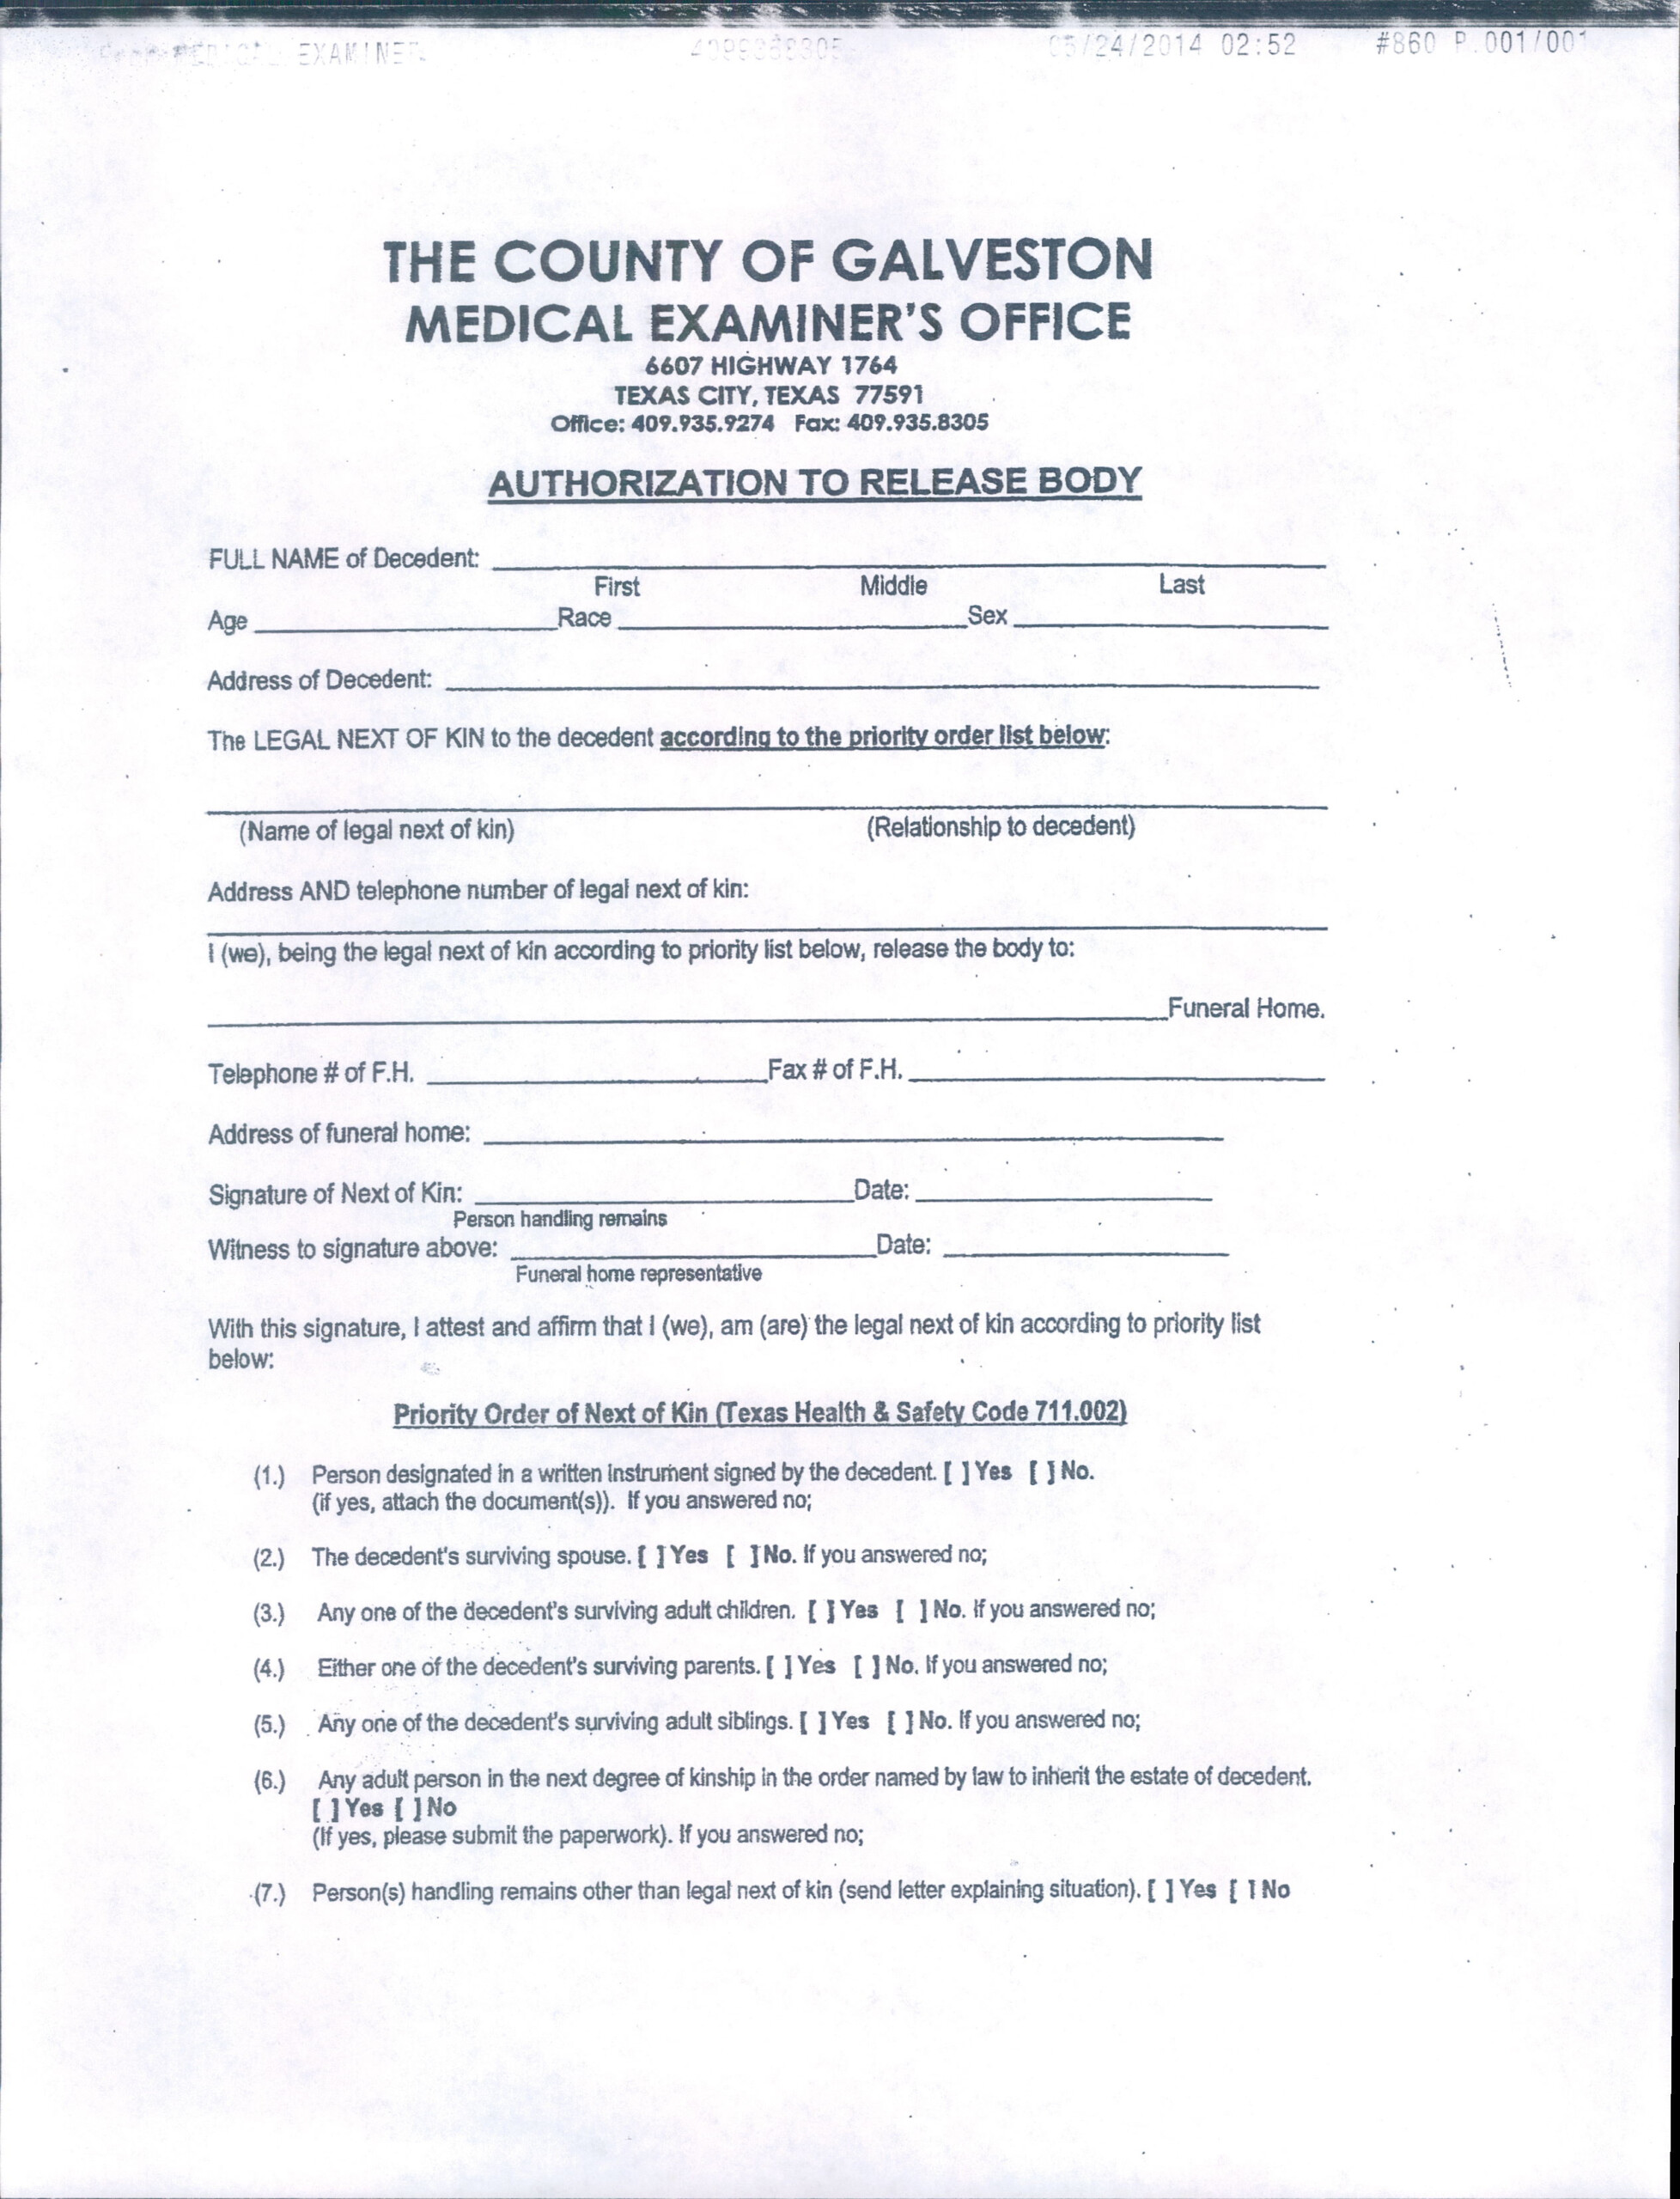 galveston-county-medical-examiner-release-form-releaseform